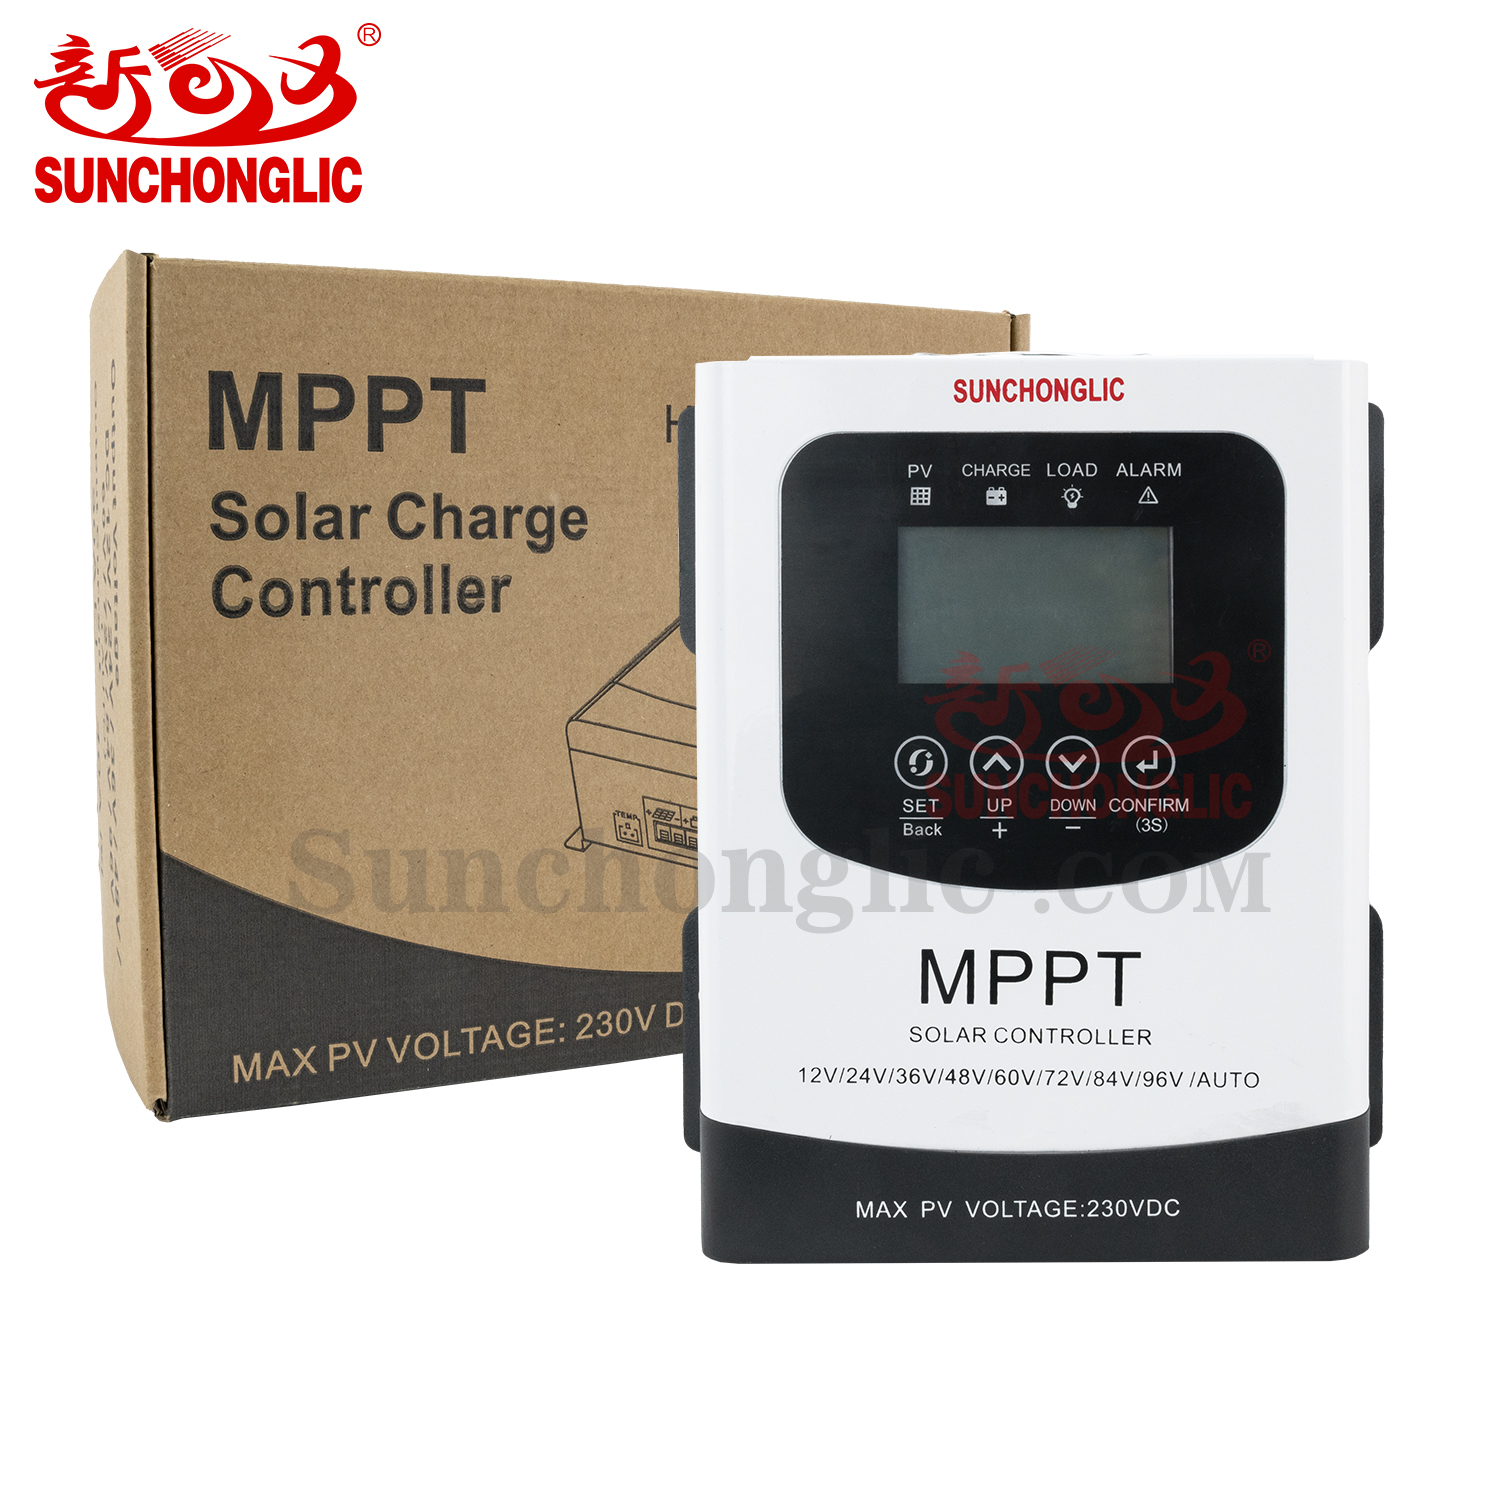 Sunchonglic solar charge controller 12V 24V 36V 48V 60V 72V 84V 96V 30A MPPT solar charger controller